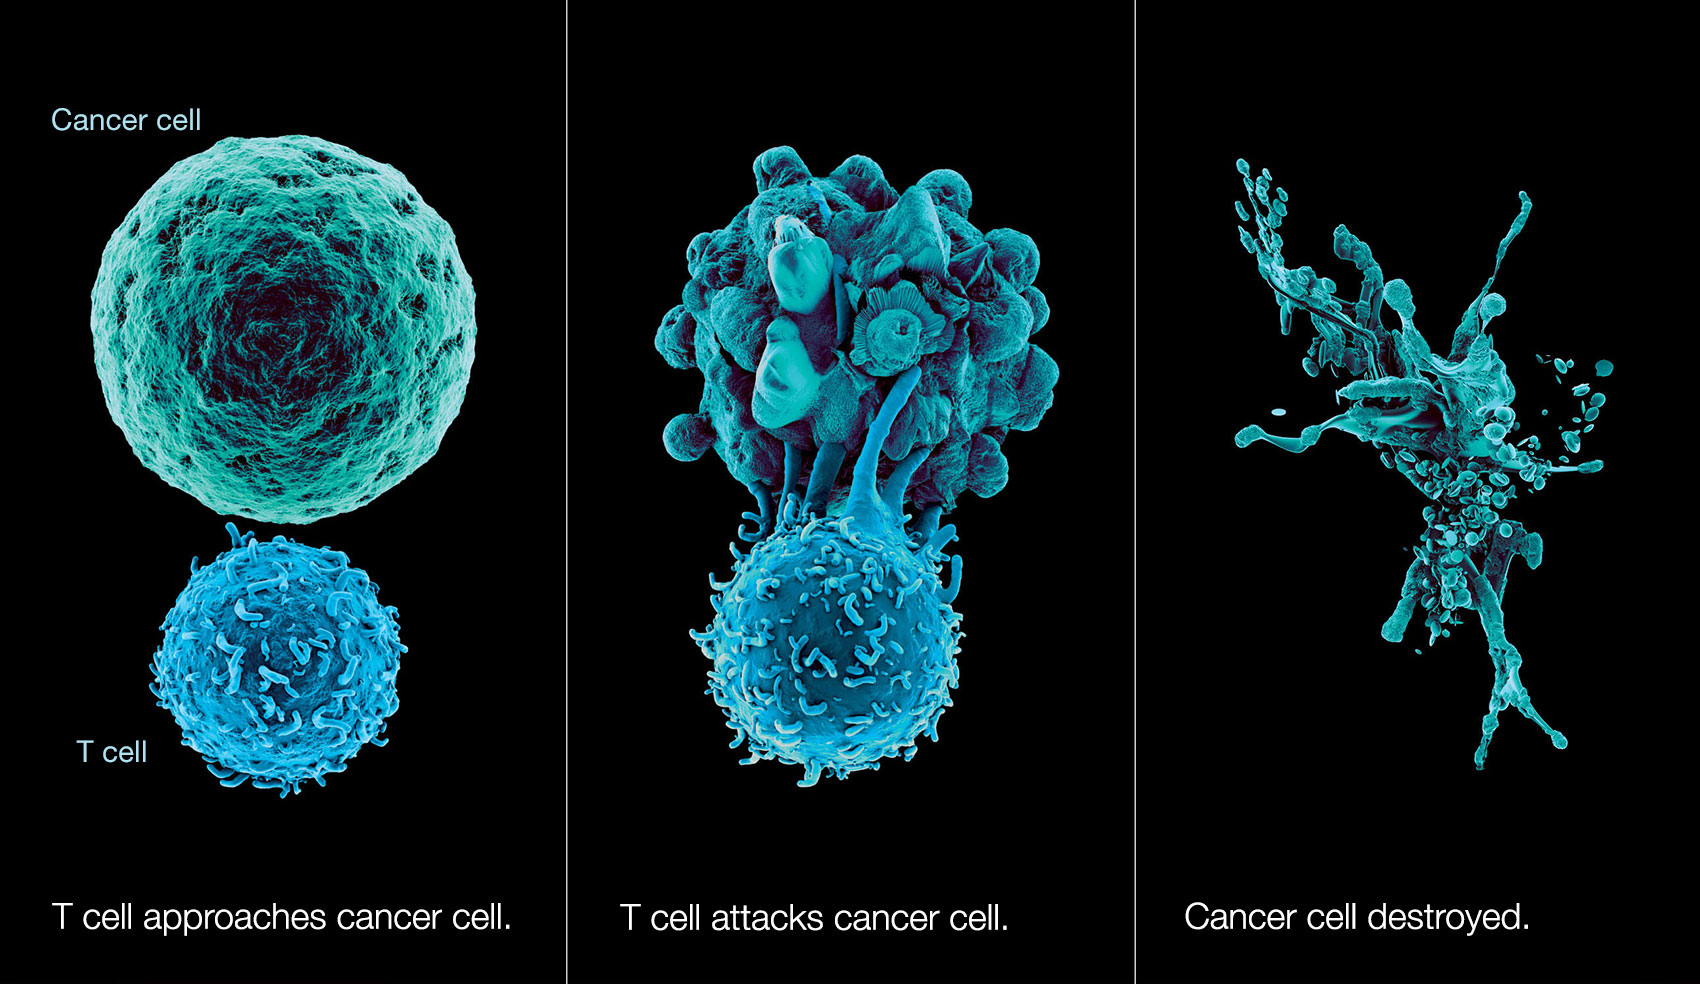 What do cancer cells destroy?